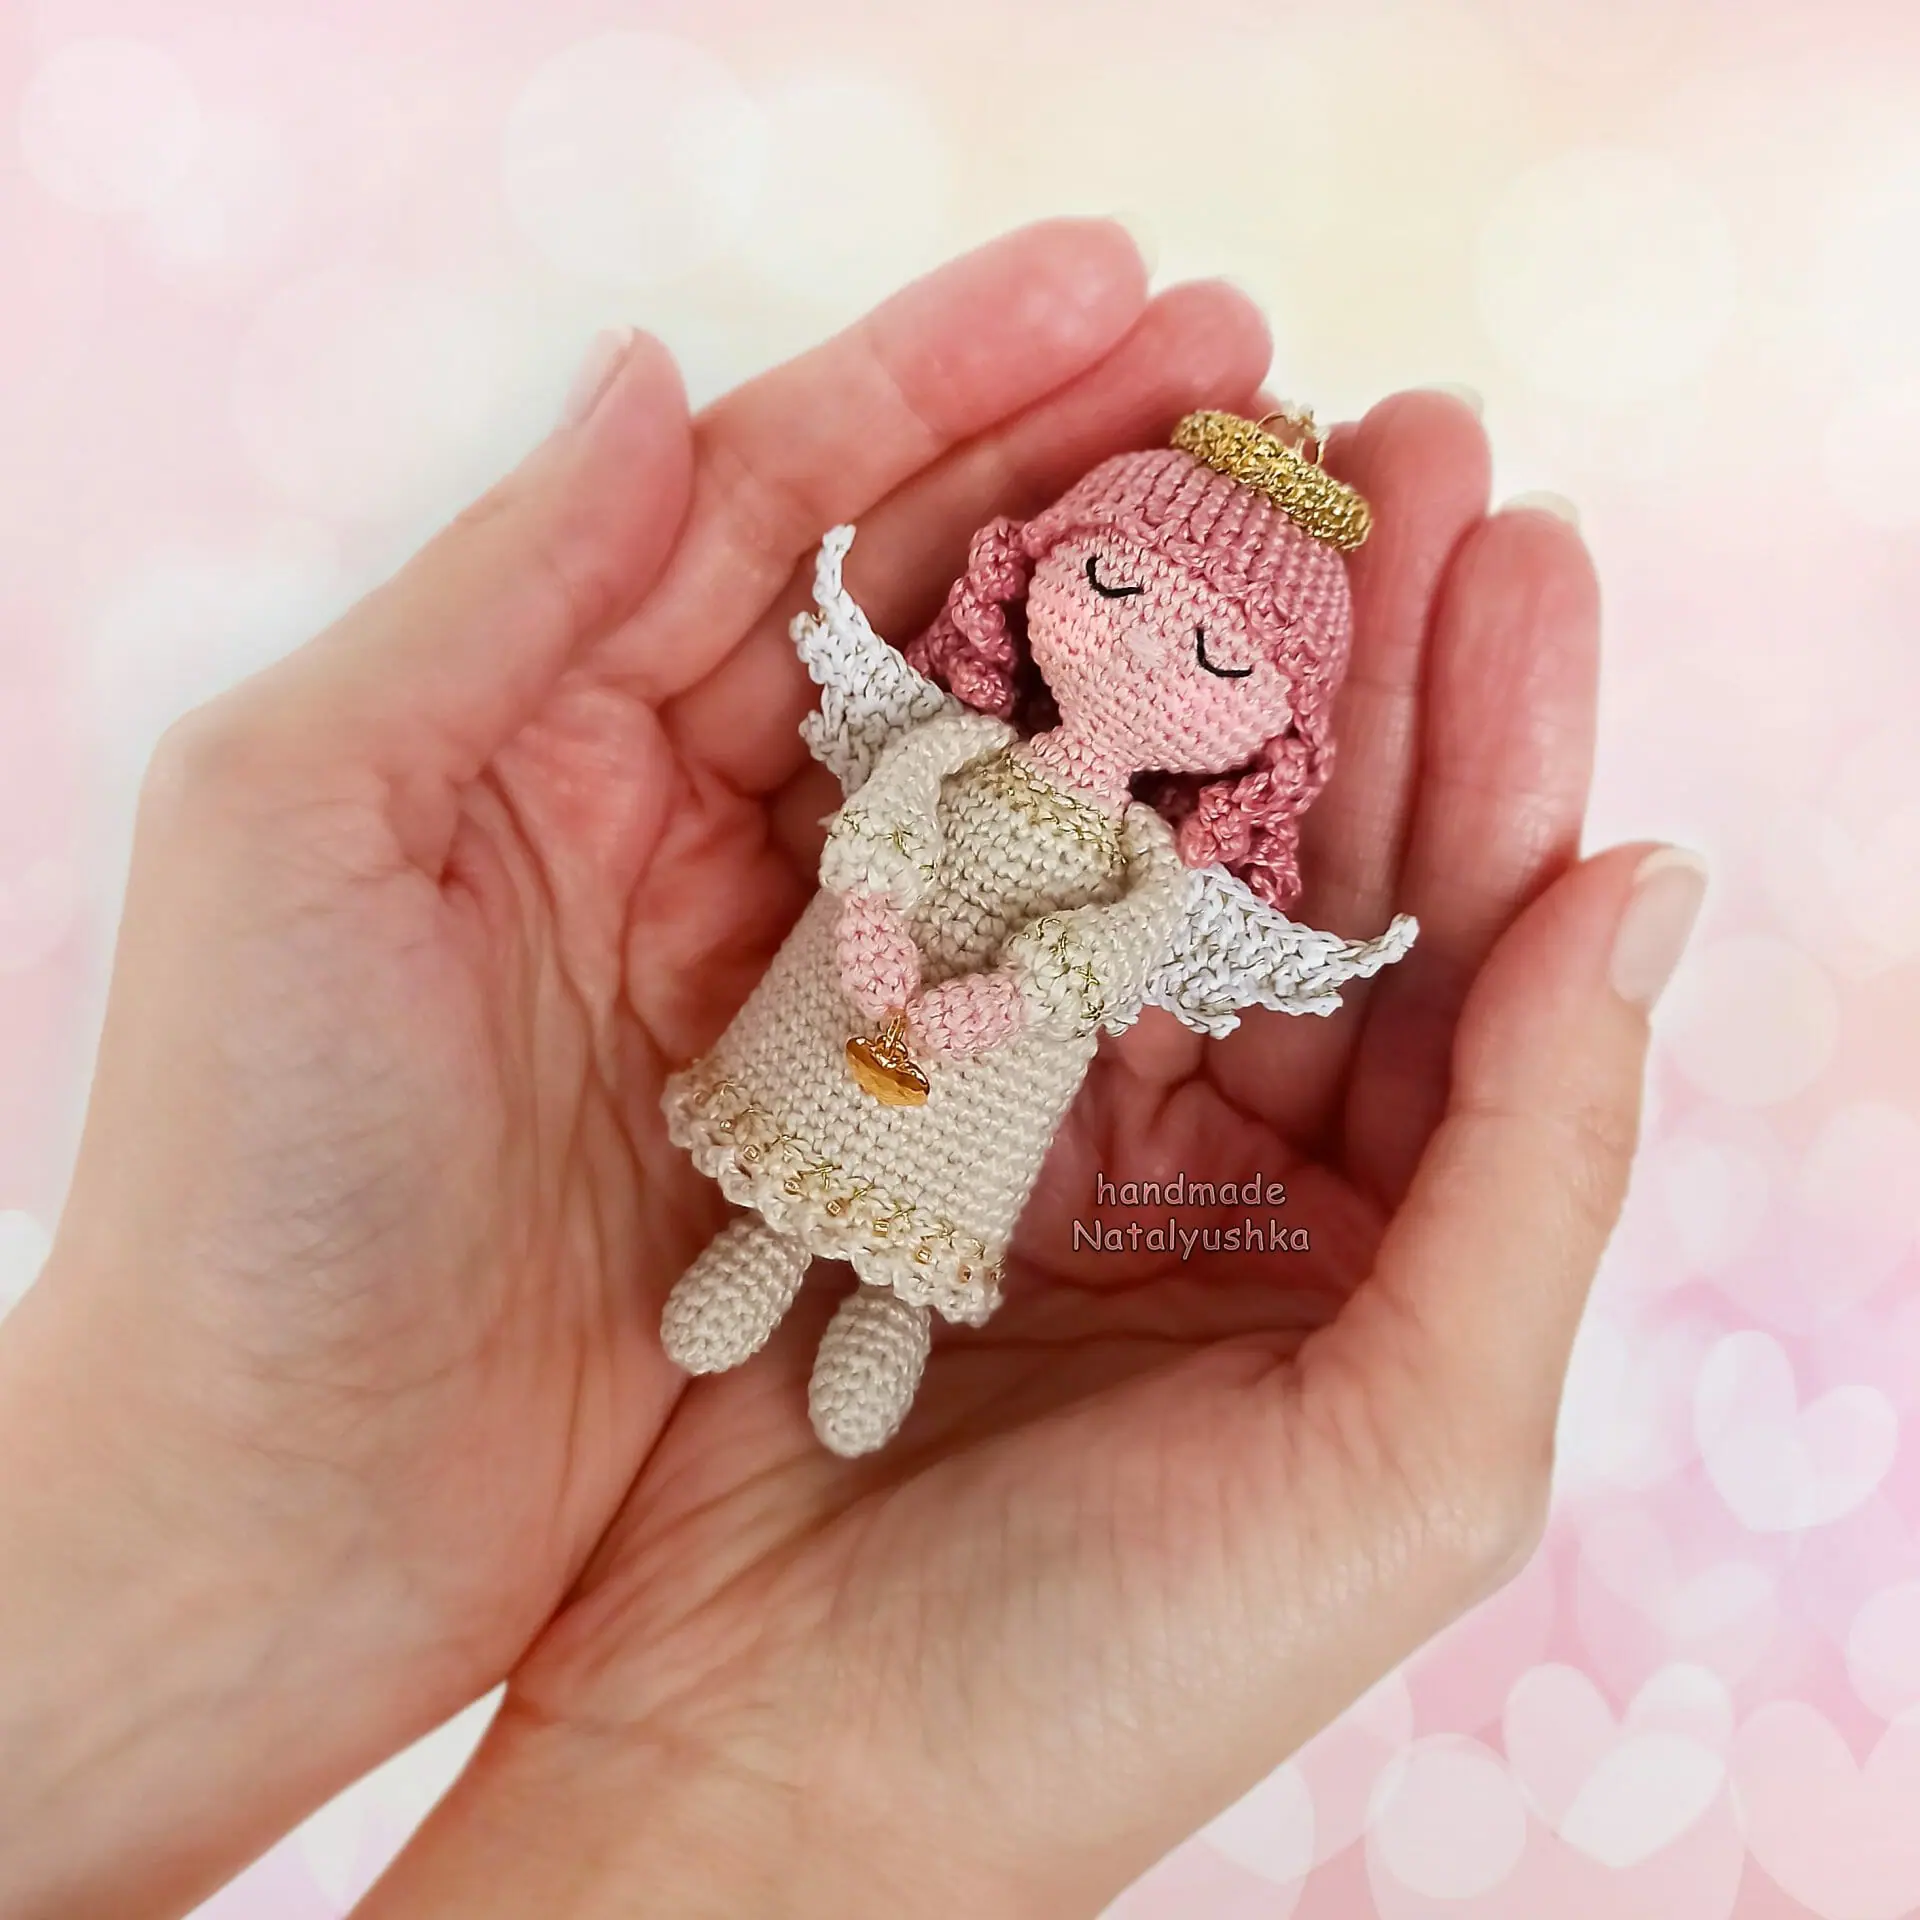 Crochet Angel with heart